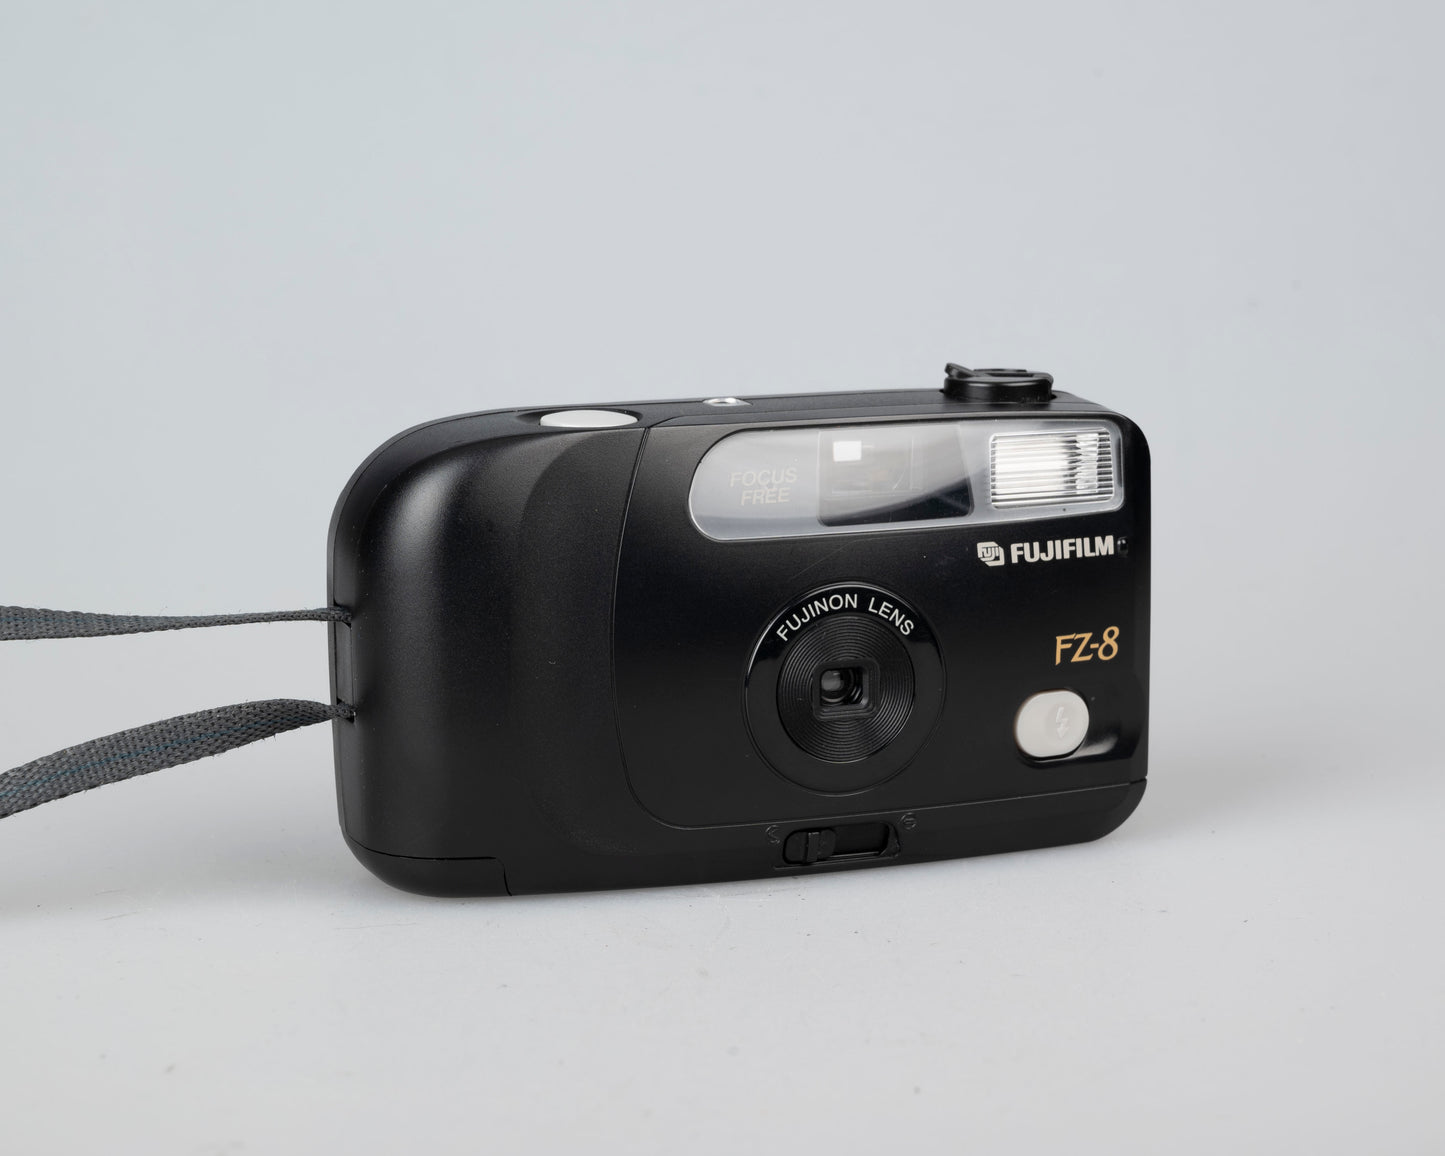 Fujifilm FZ-8 35mm film camera